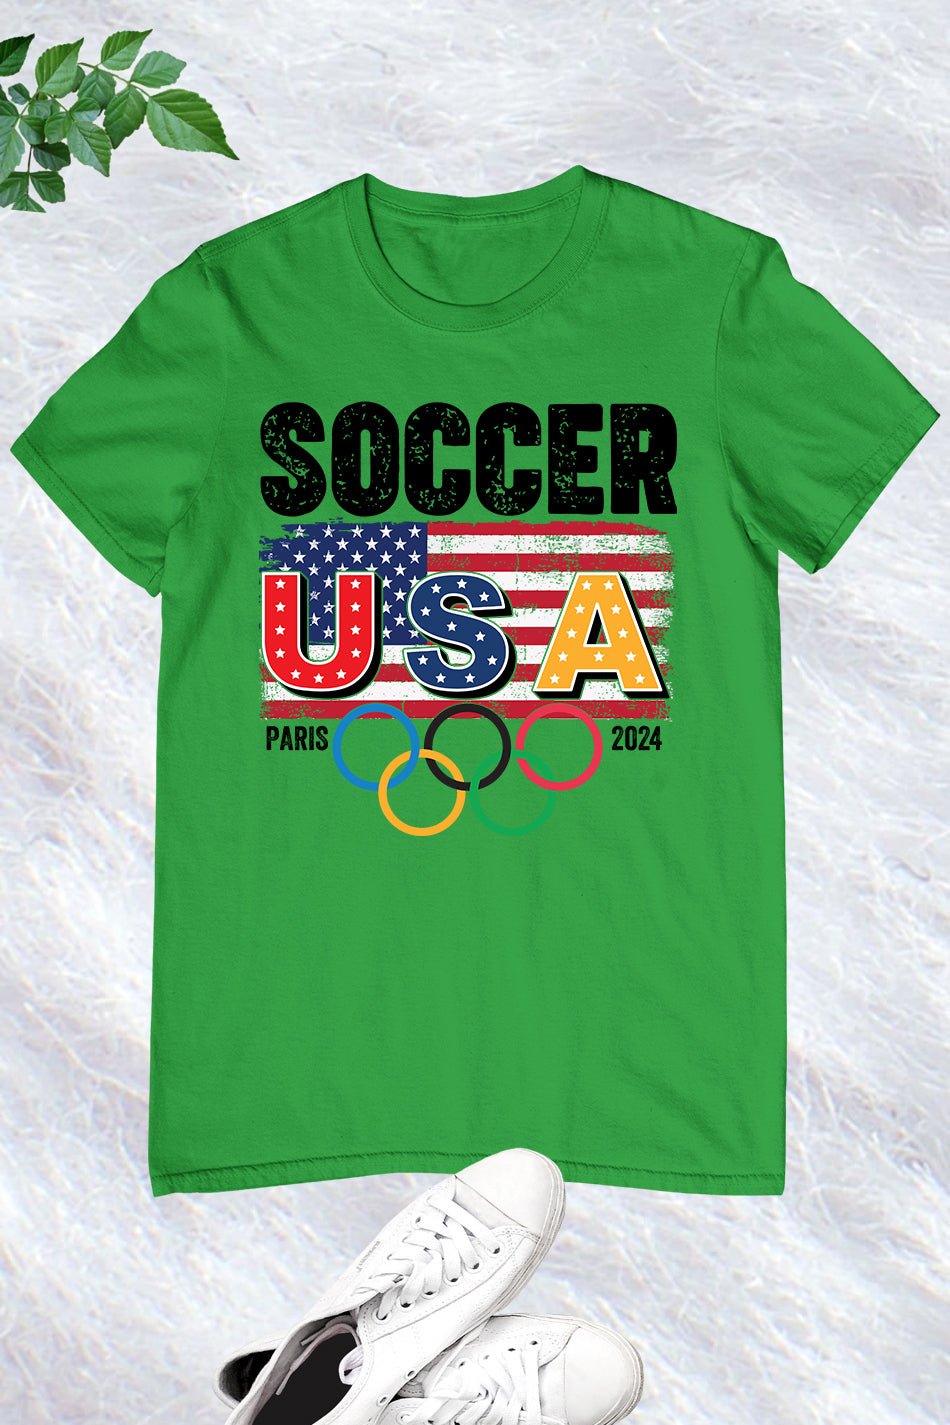 USA Soccer Supporter Olympics Paris 2024 T Shirt